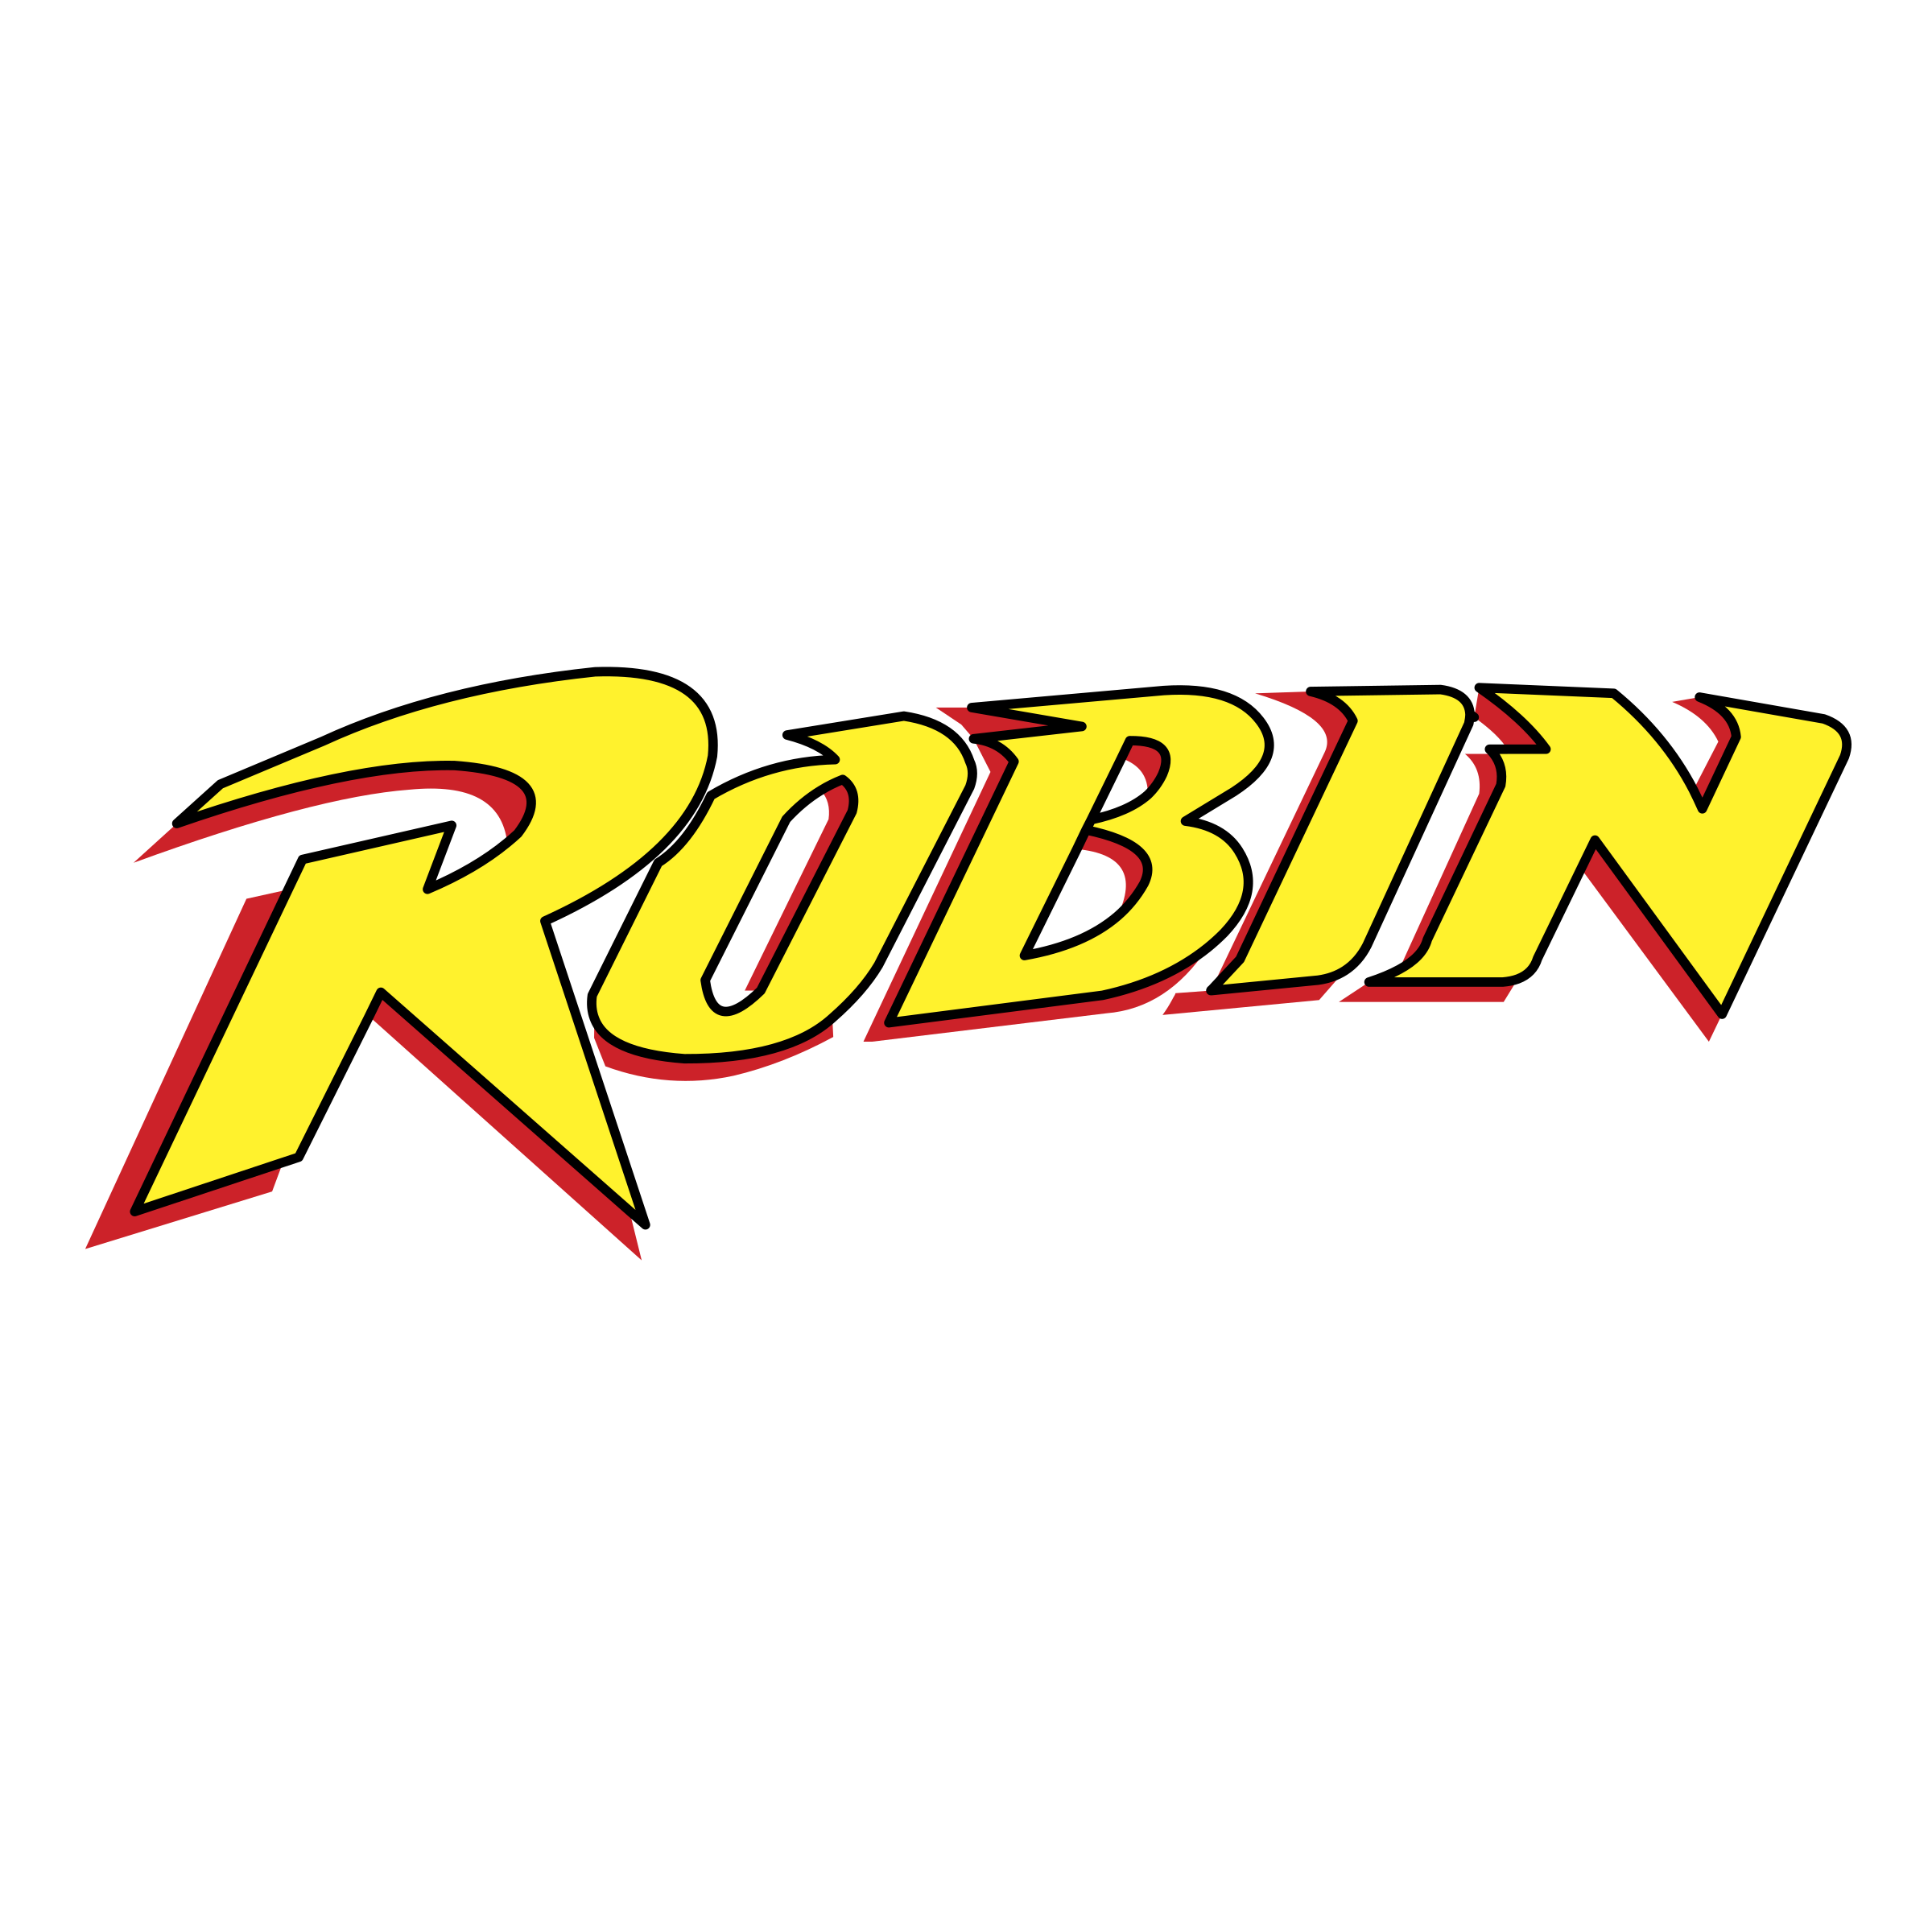 Robin PNG Image File